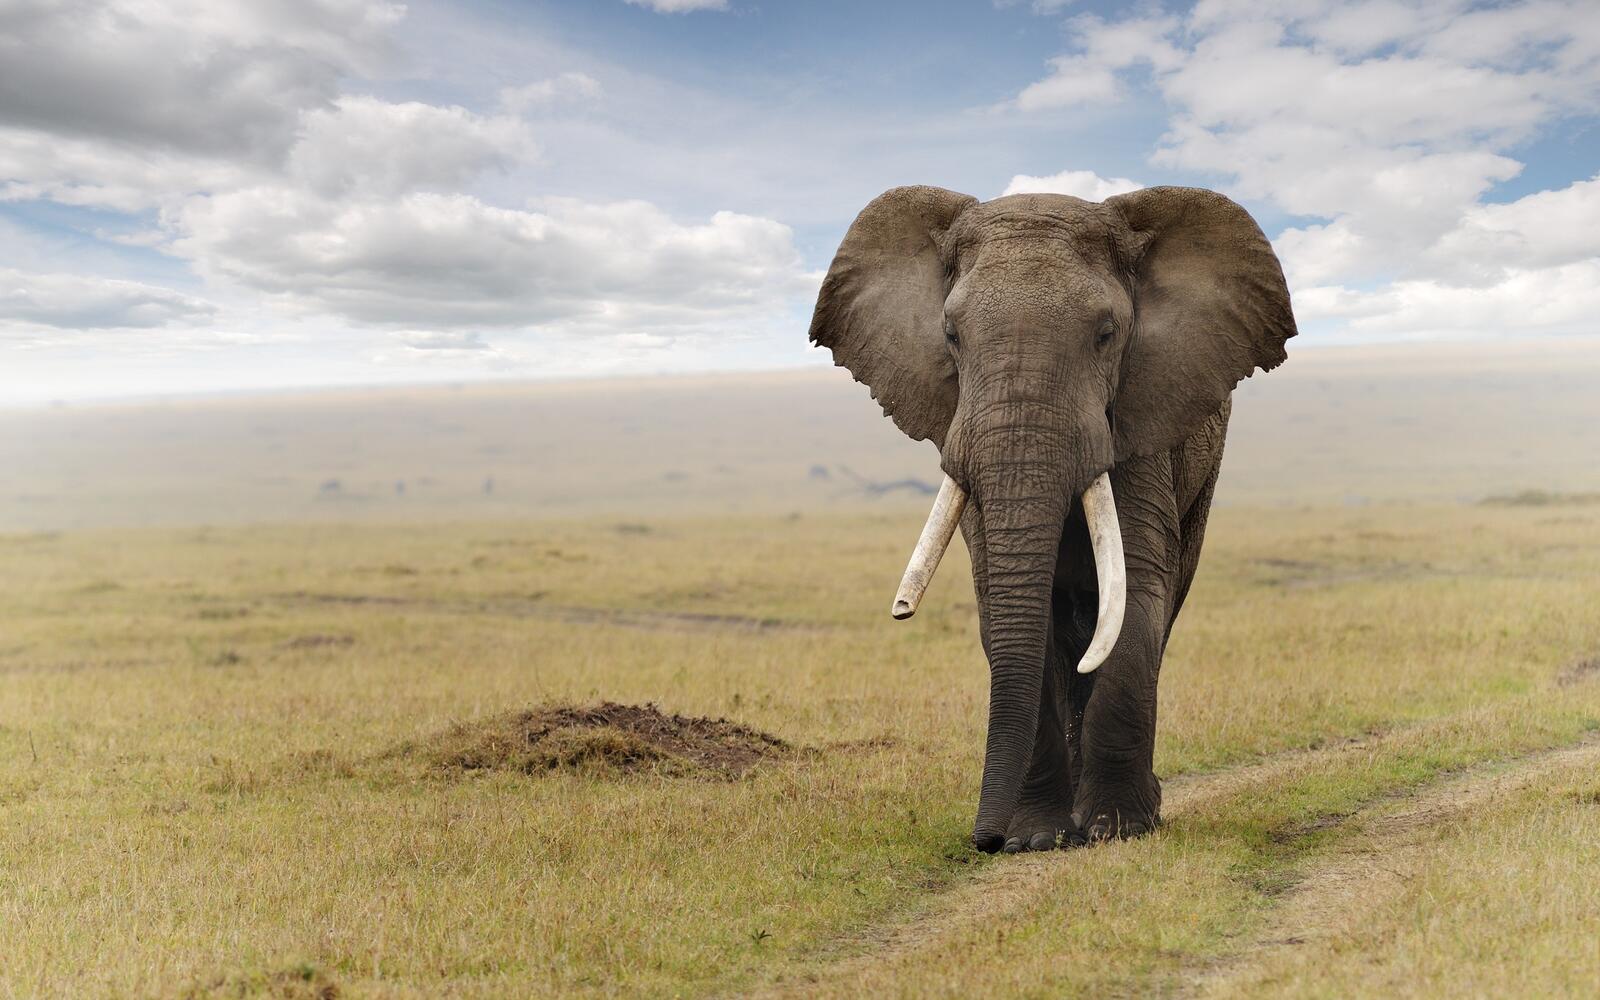 Wallpapers animals wildlife elephant on the desktop